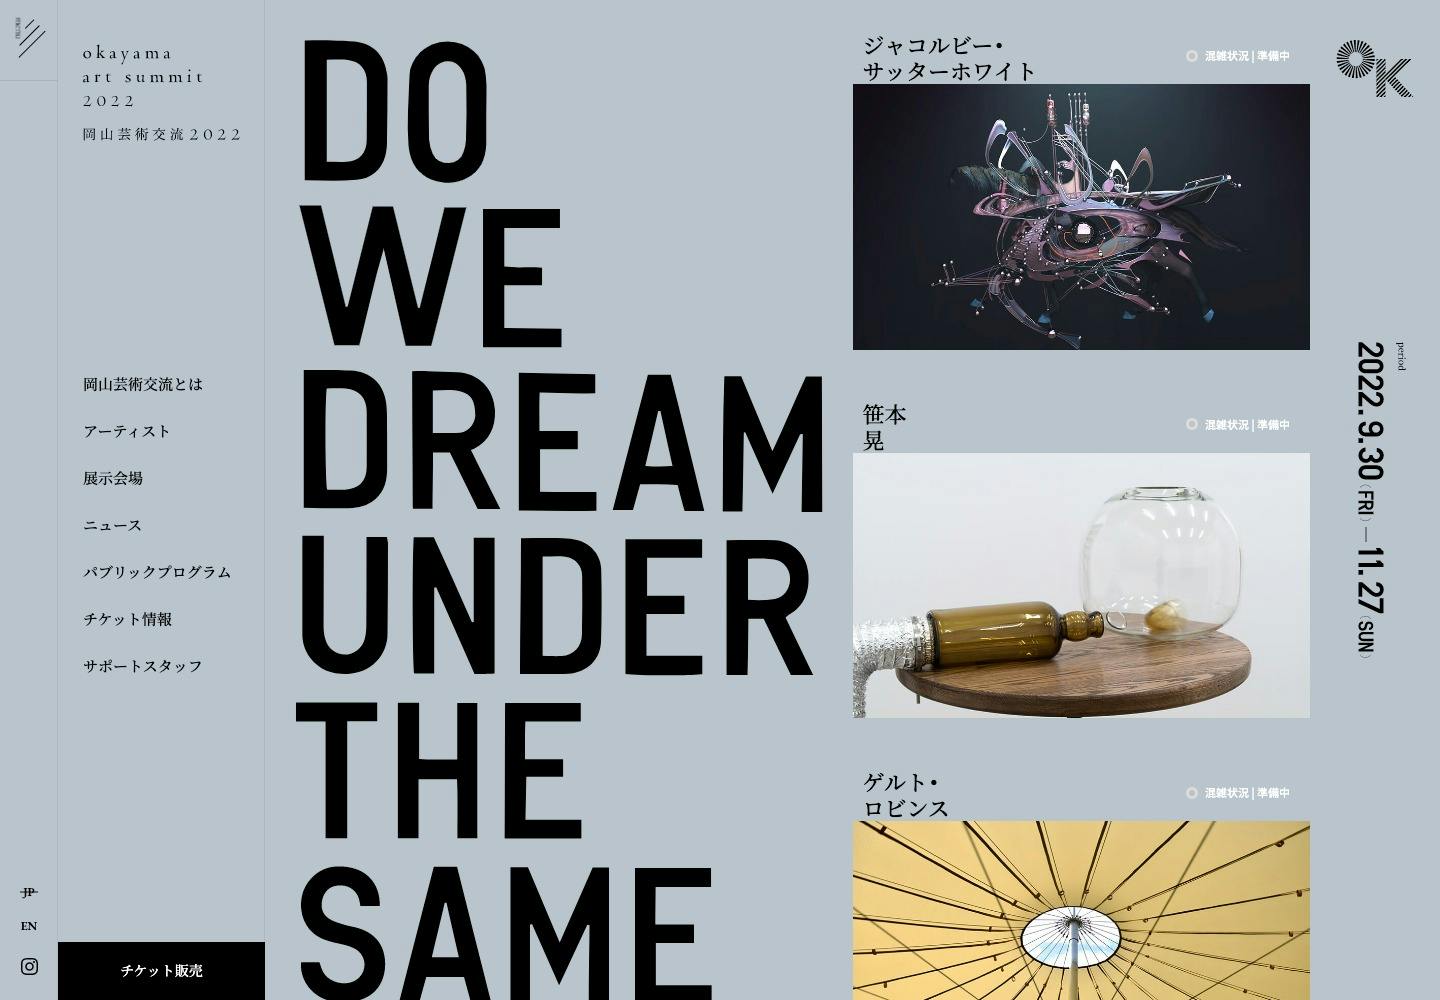 Cover Image for 岡山芸術交流 OKAYAMA ART SUMMIT 2022